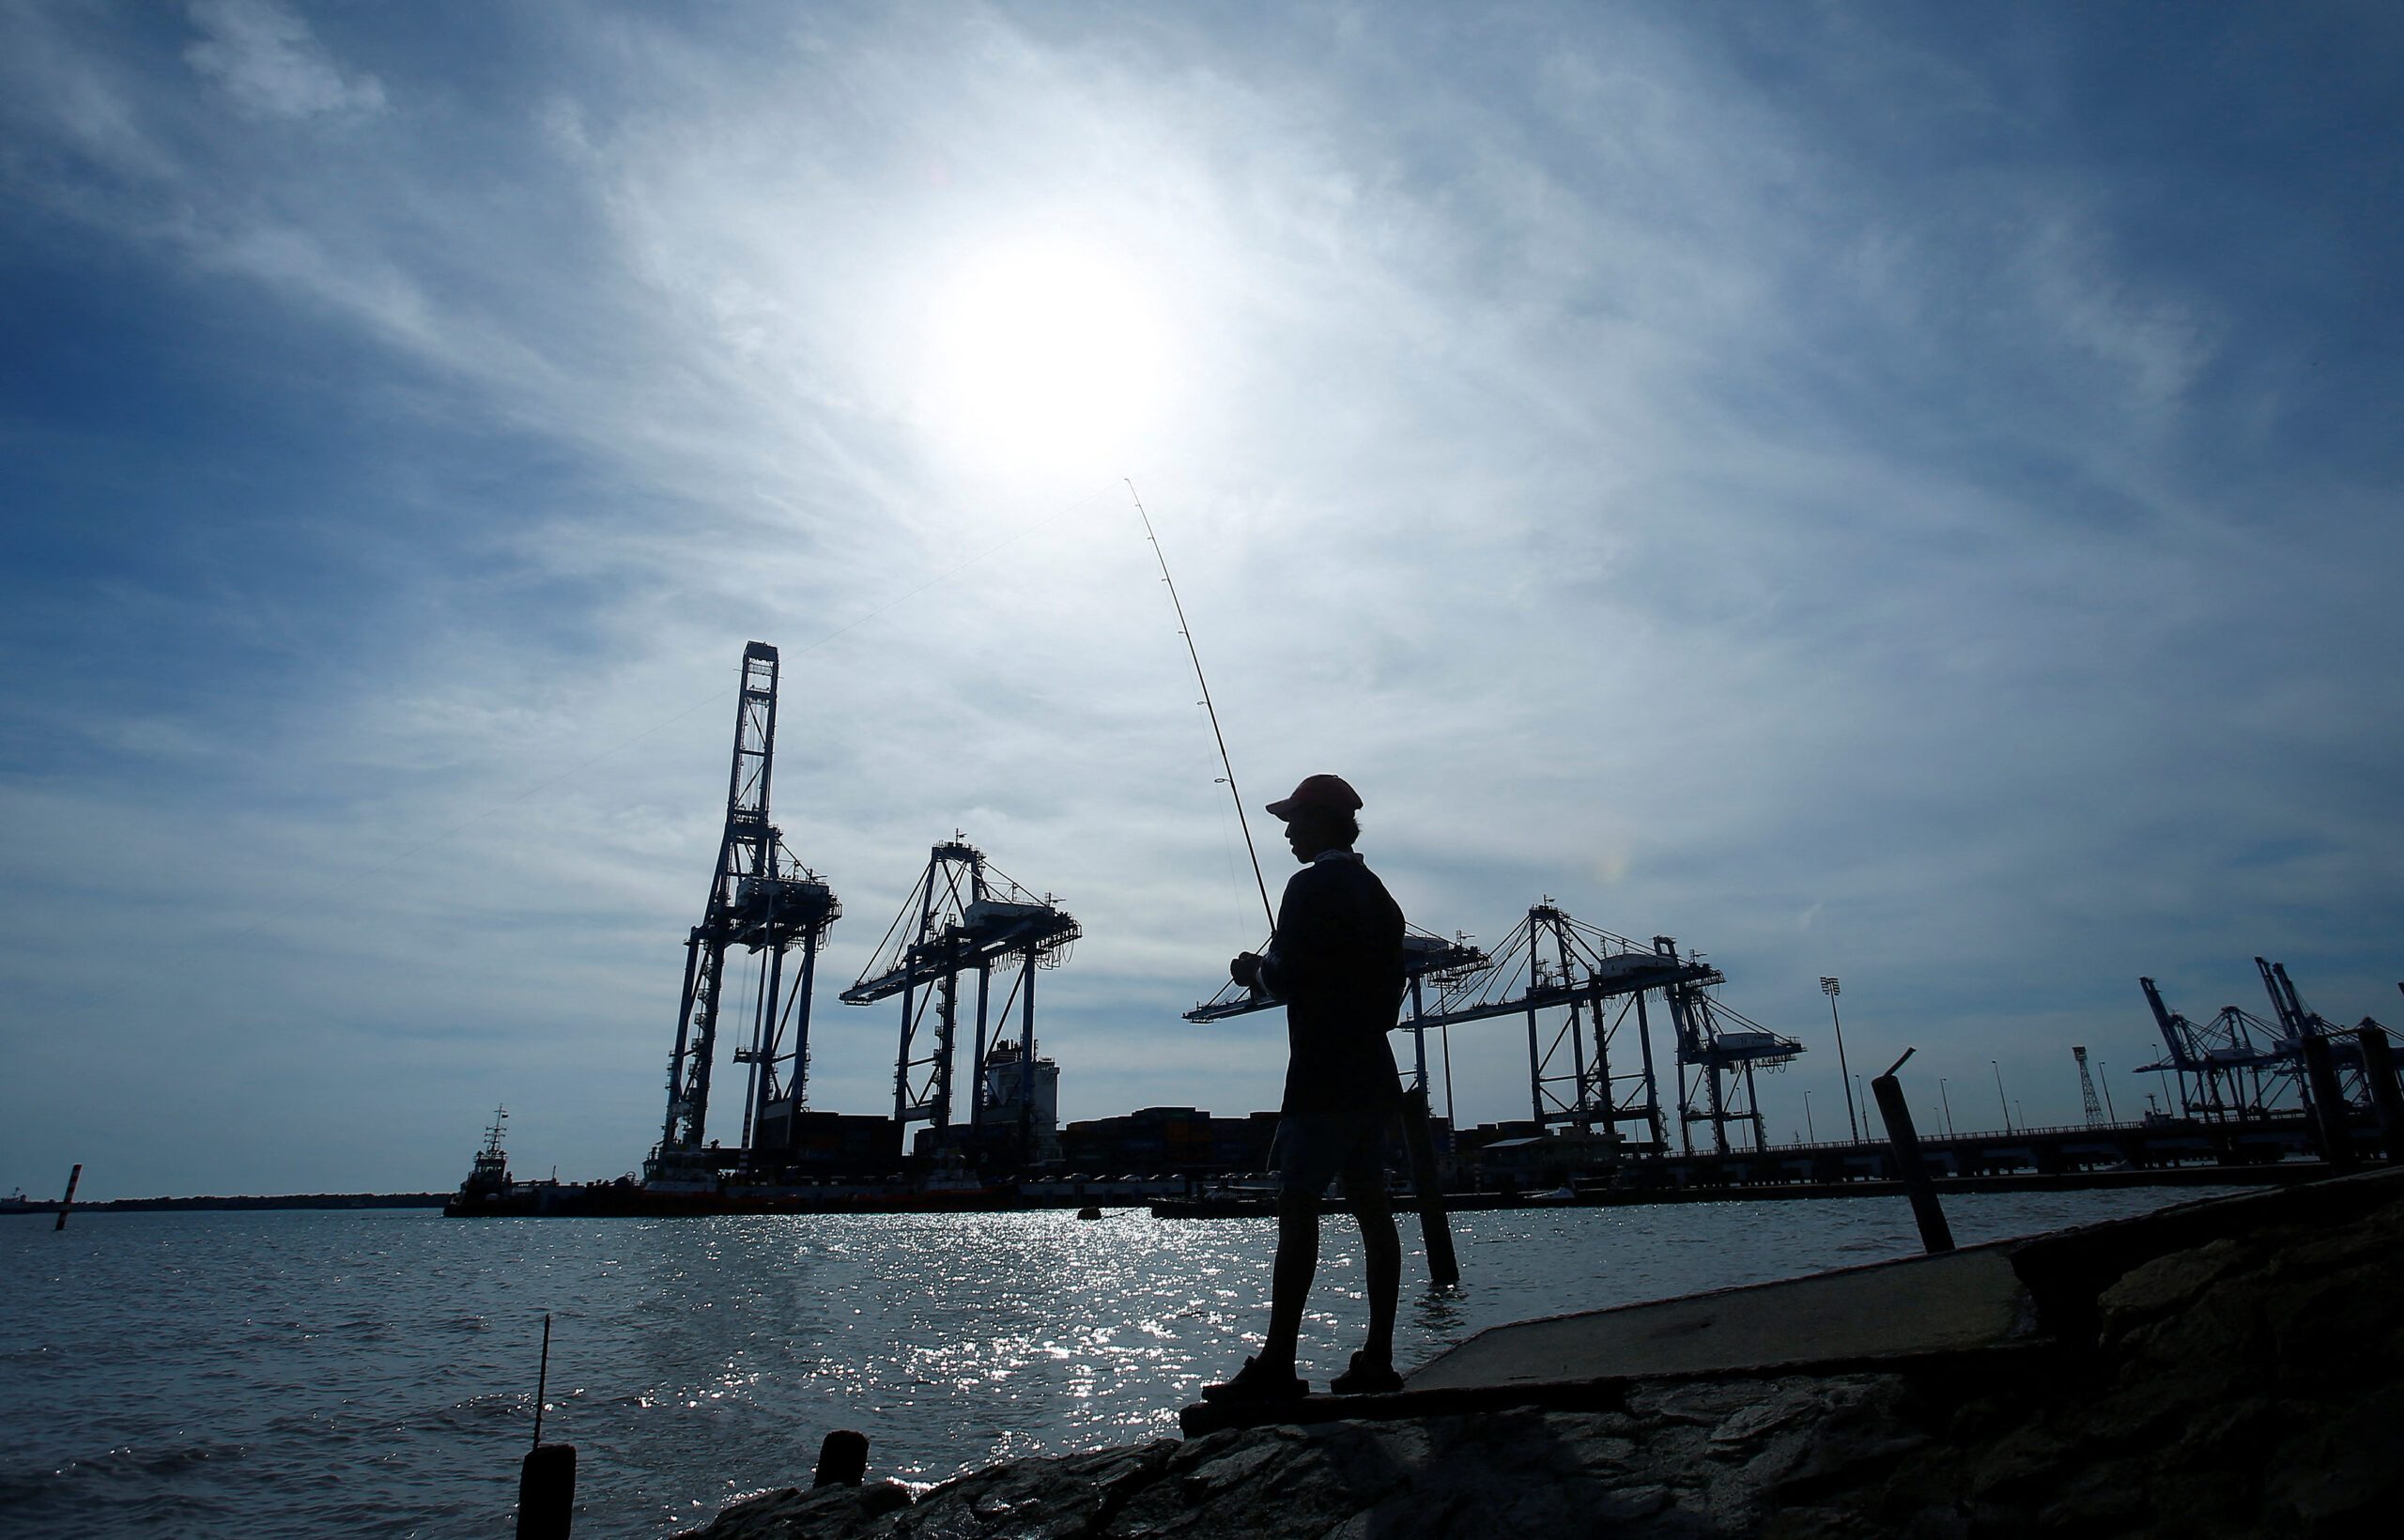 GIP in talks to buy up to 49% stake in Malaysian port operator MMC